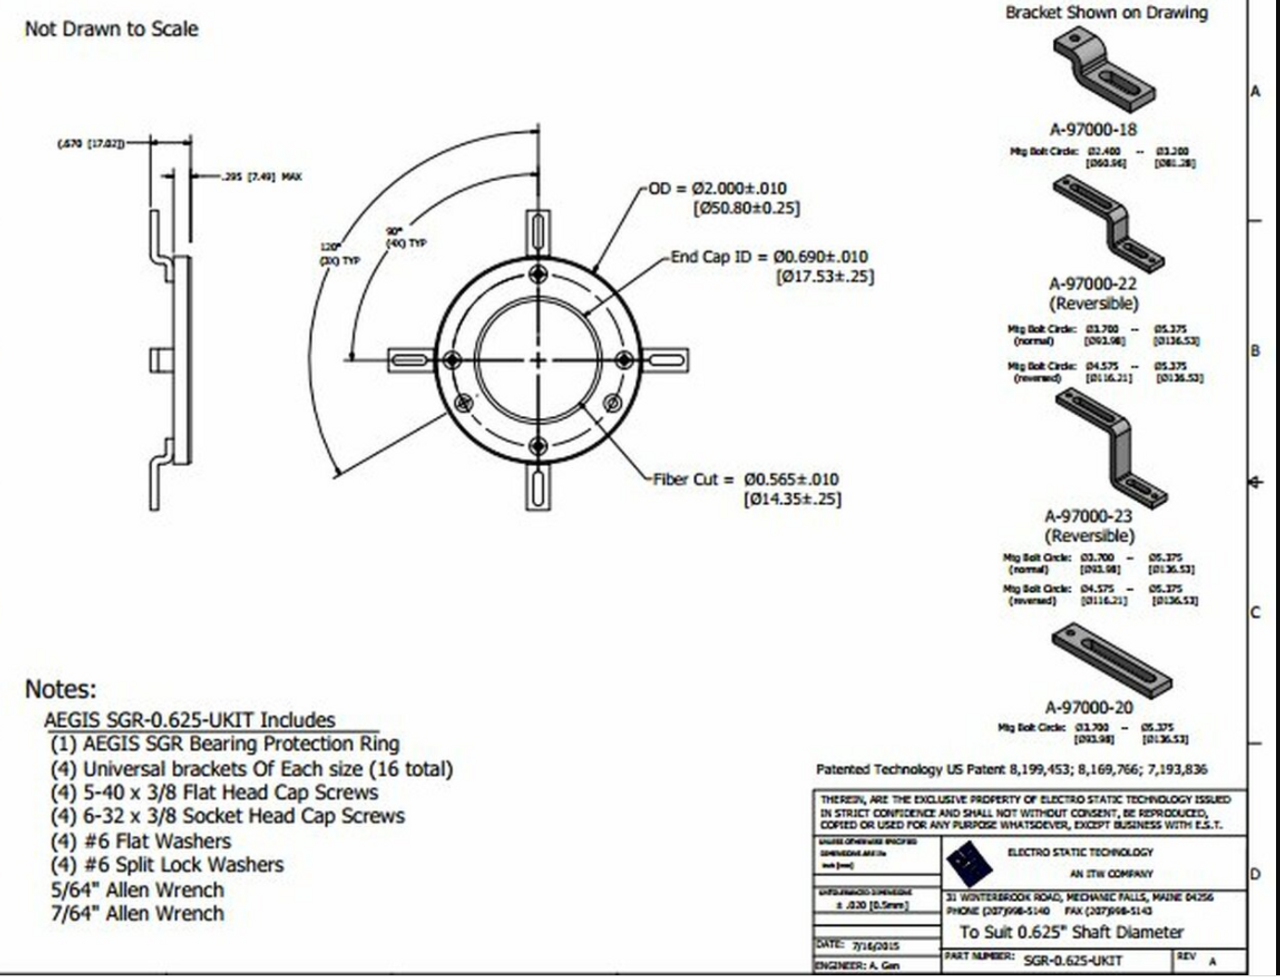 SGR-1.875-UKIT-1A4,  AEGIS Bearing Protection Split Ring 1-7/8" (284T, 286T, 324TS, 326TS, 364TS, 365TS Frame) Shaft Diameter  